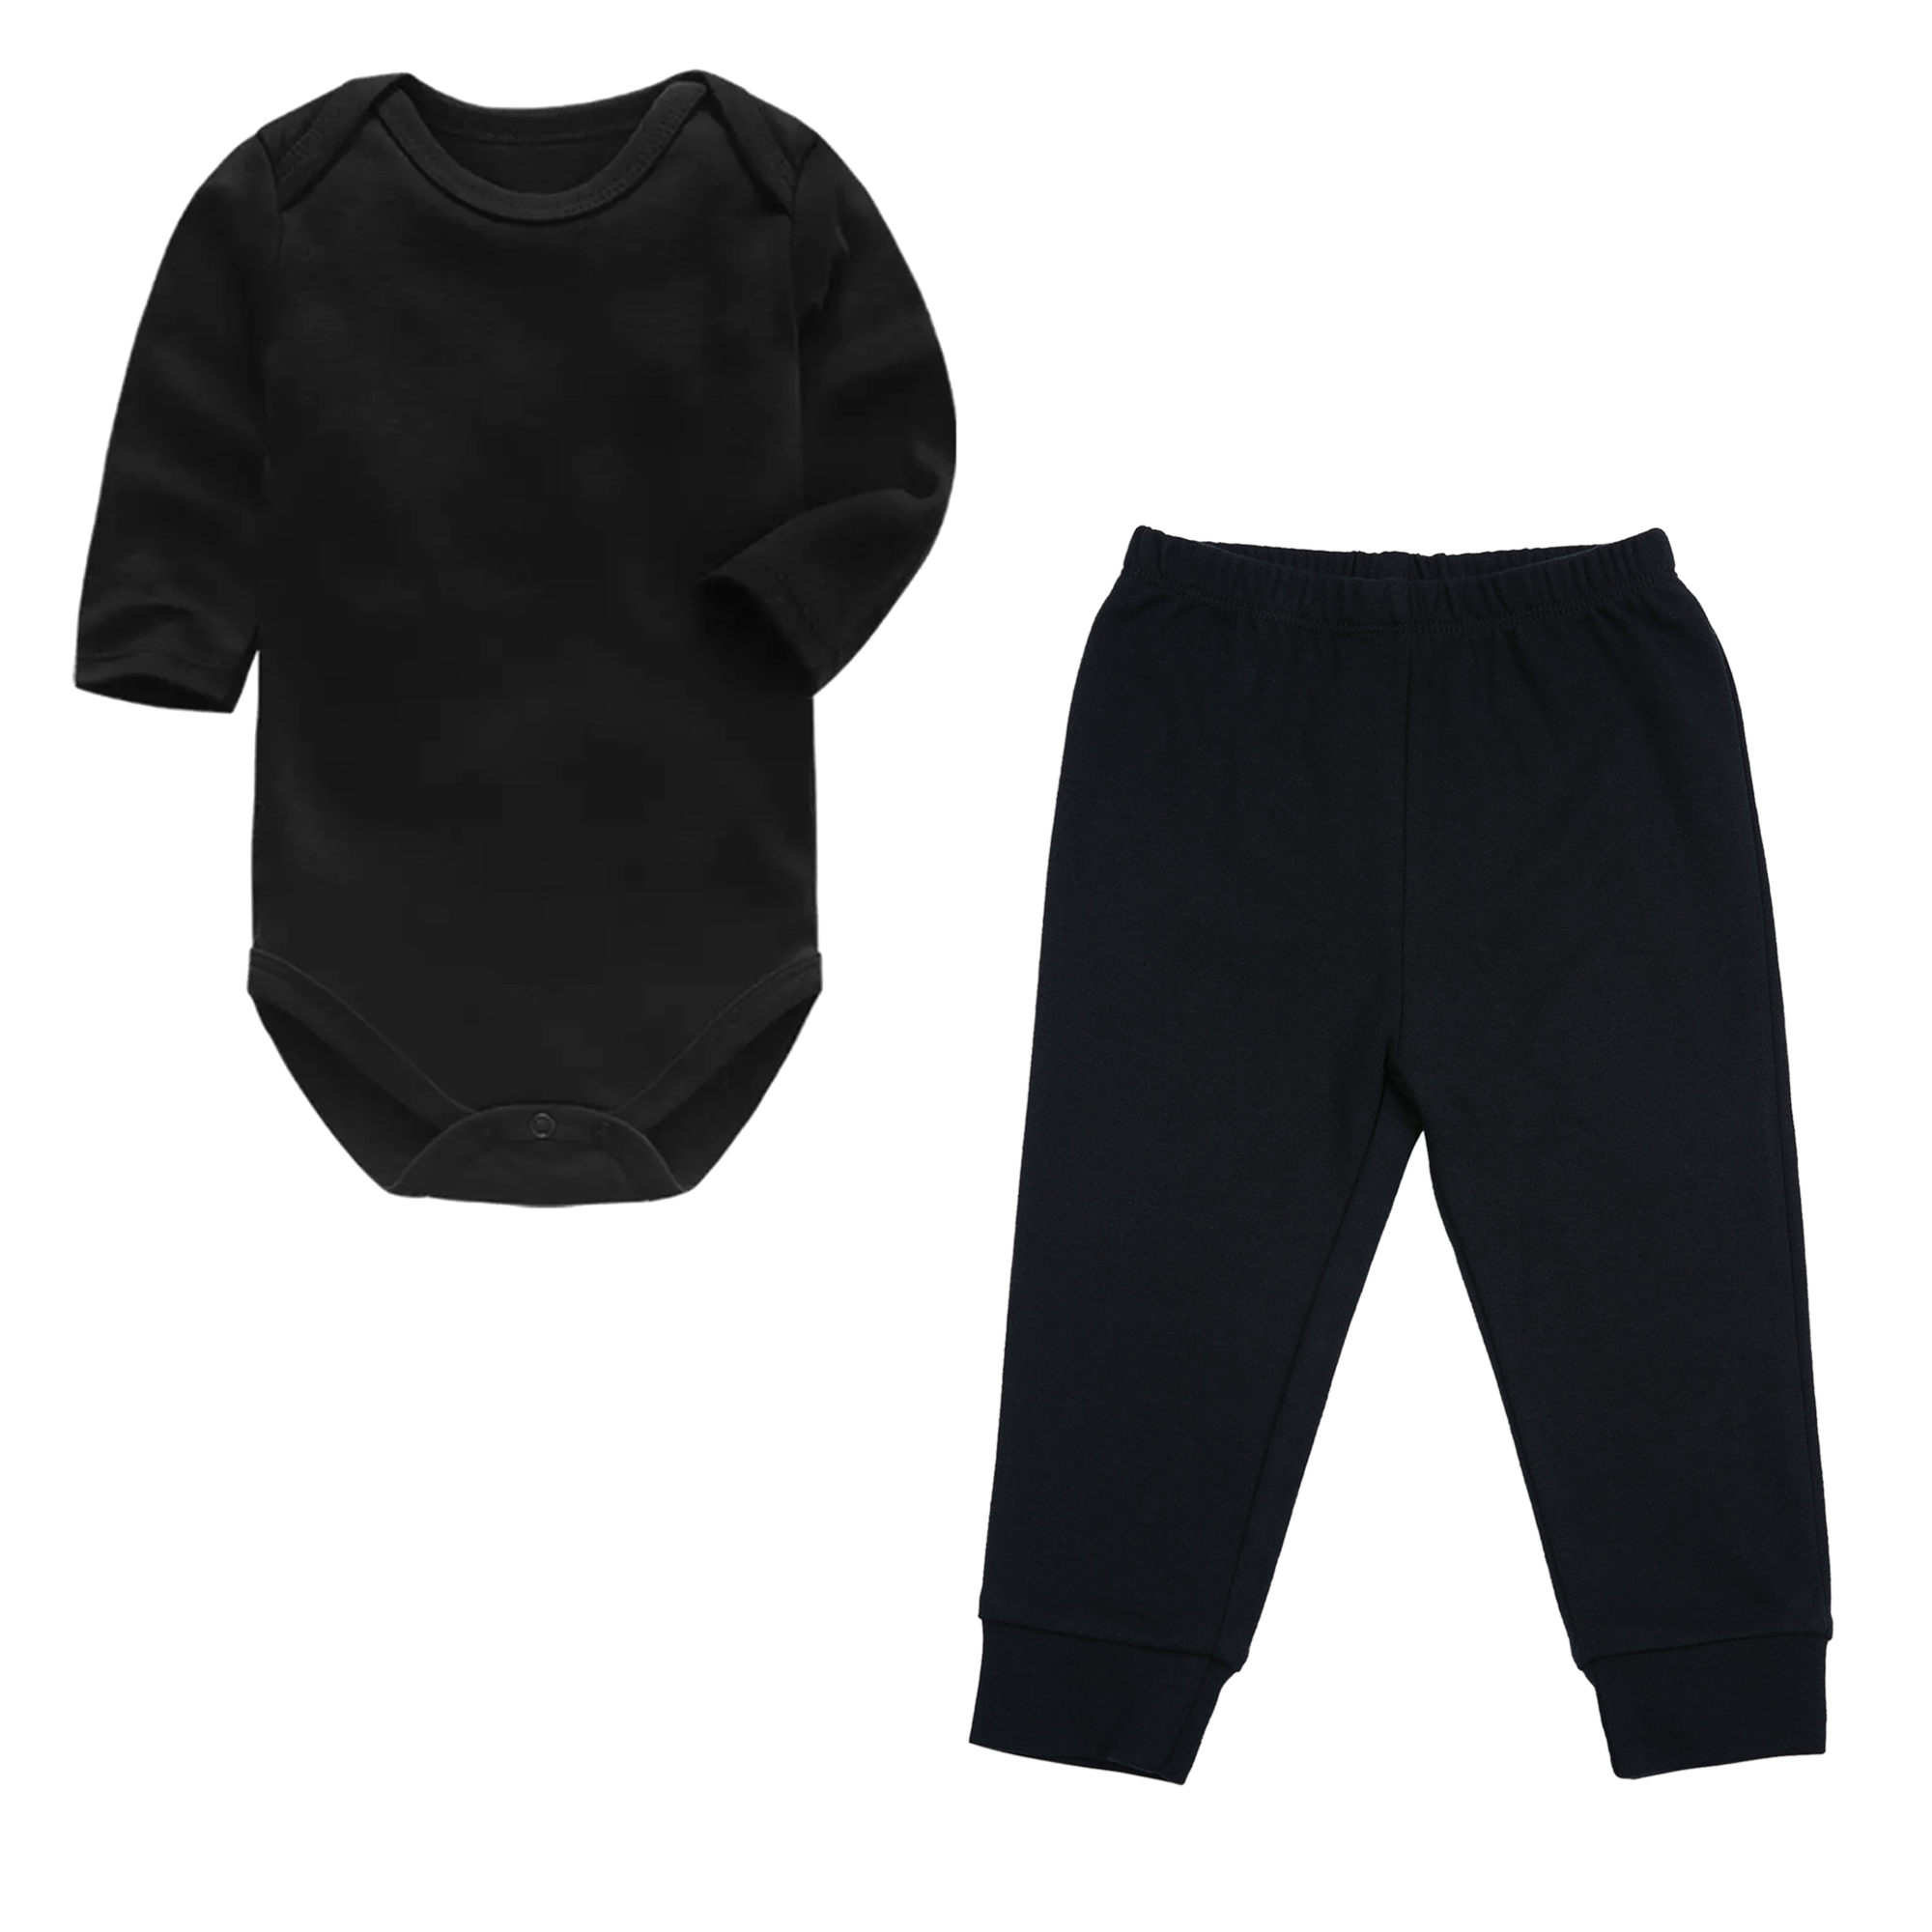 Black Long Sleeved Baby Bodysuit & Pant Set